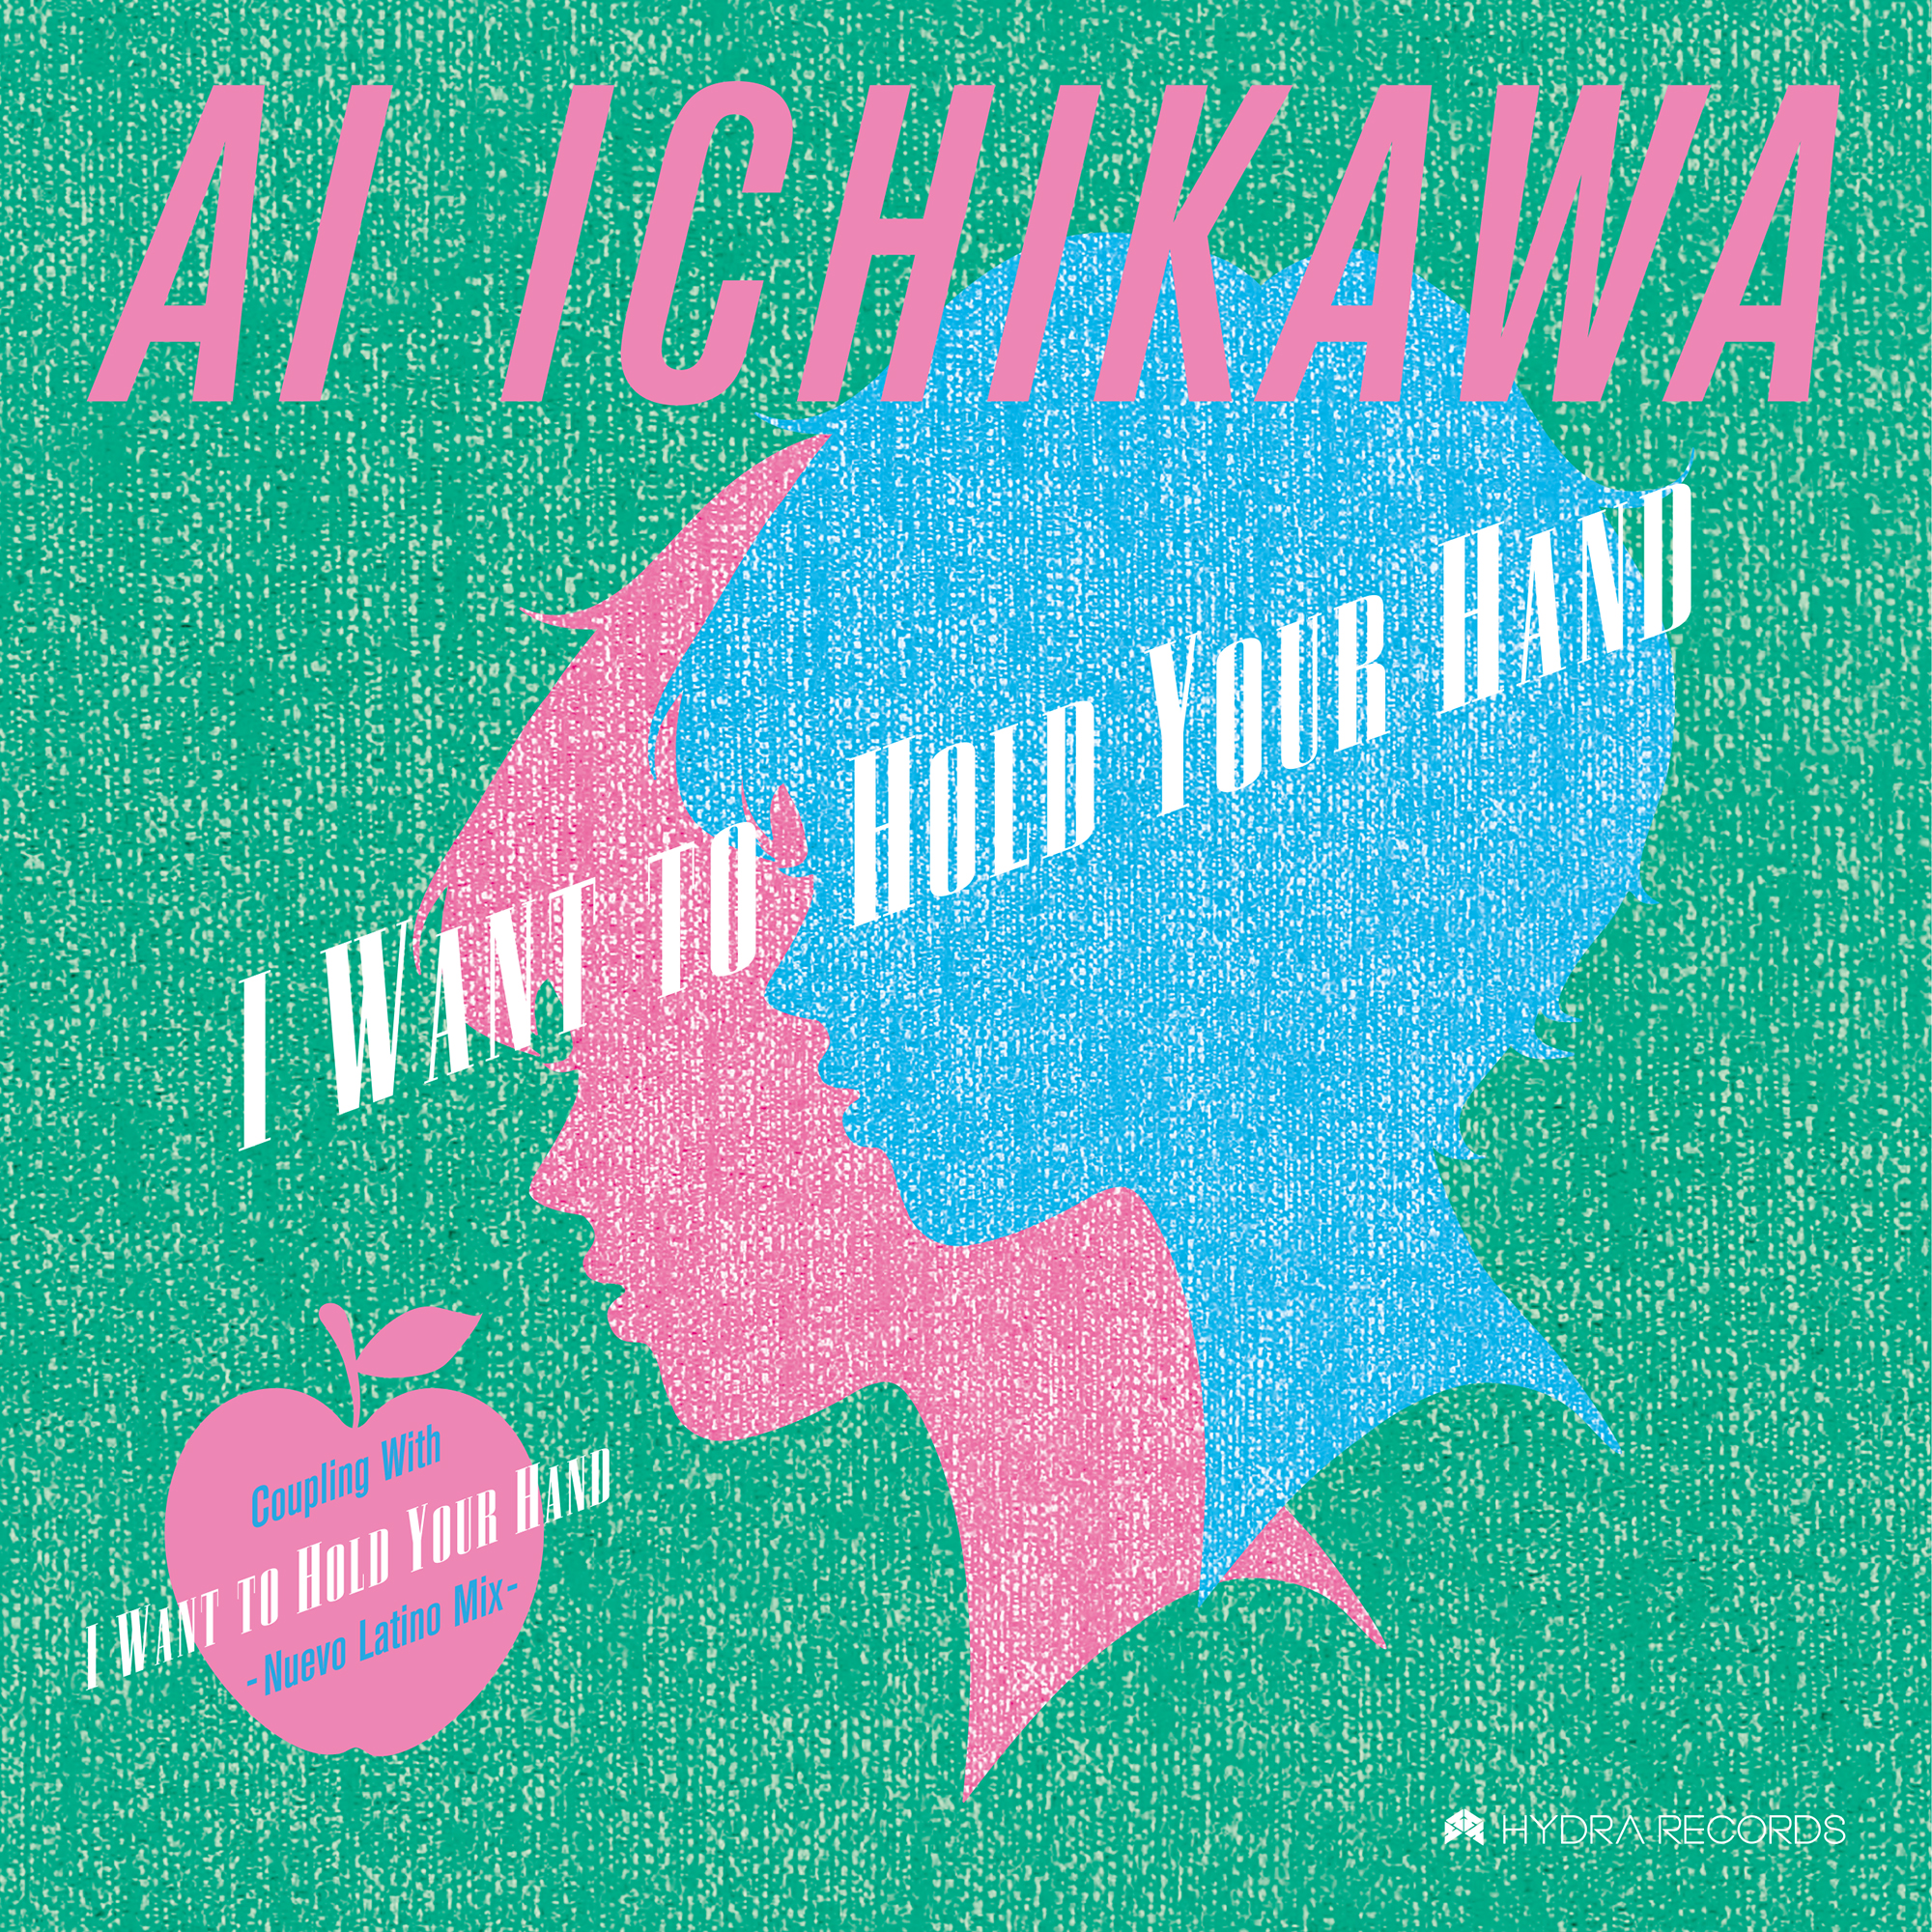 Ai Ichikawa “I Want to Hold Your Hand”